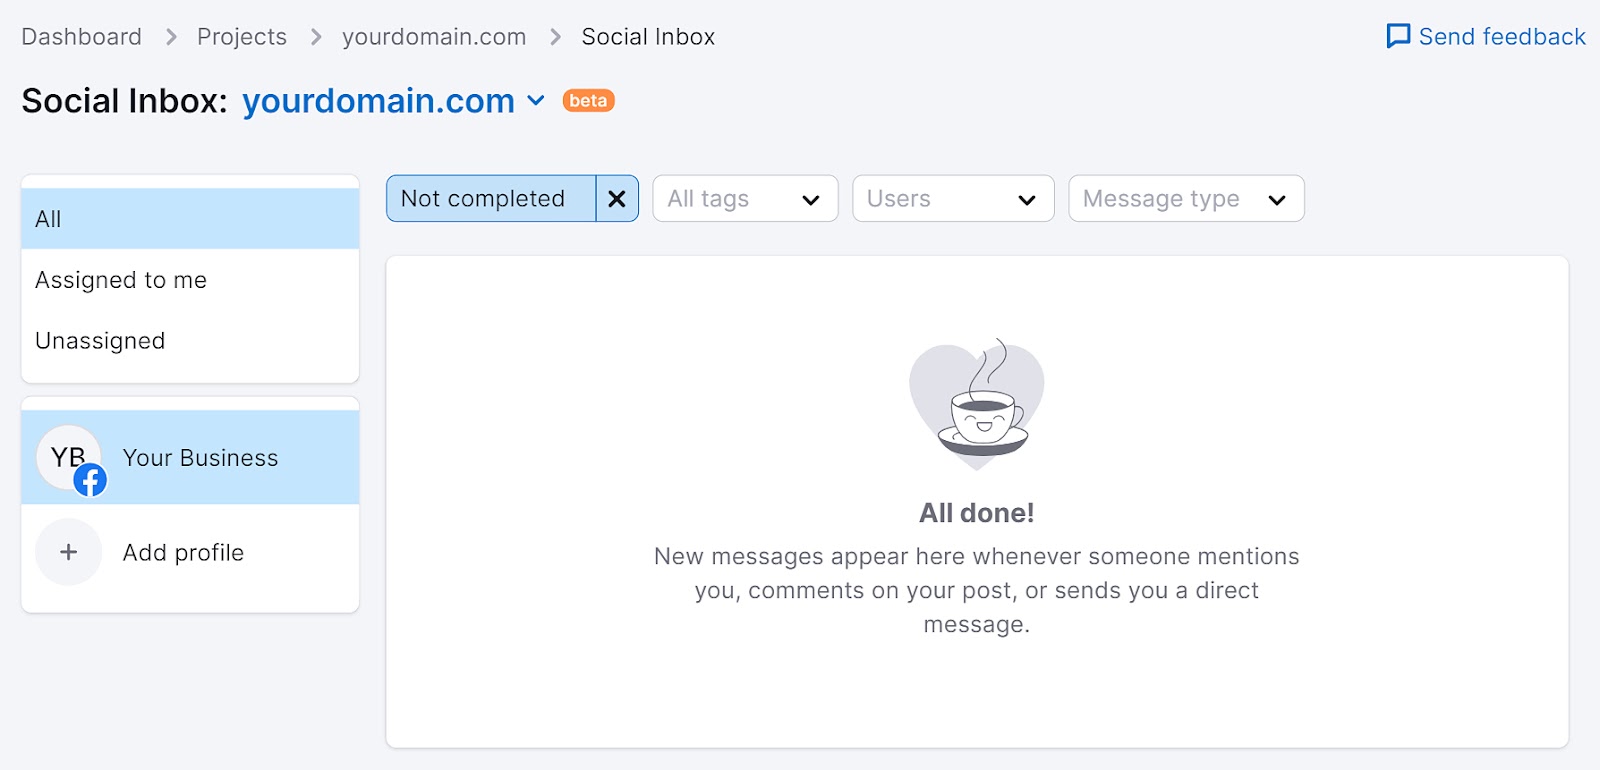 Semrush’s Social Inbox dashboard